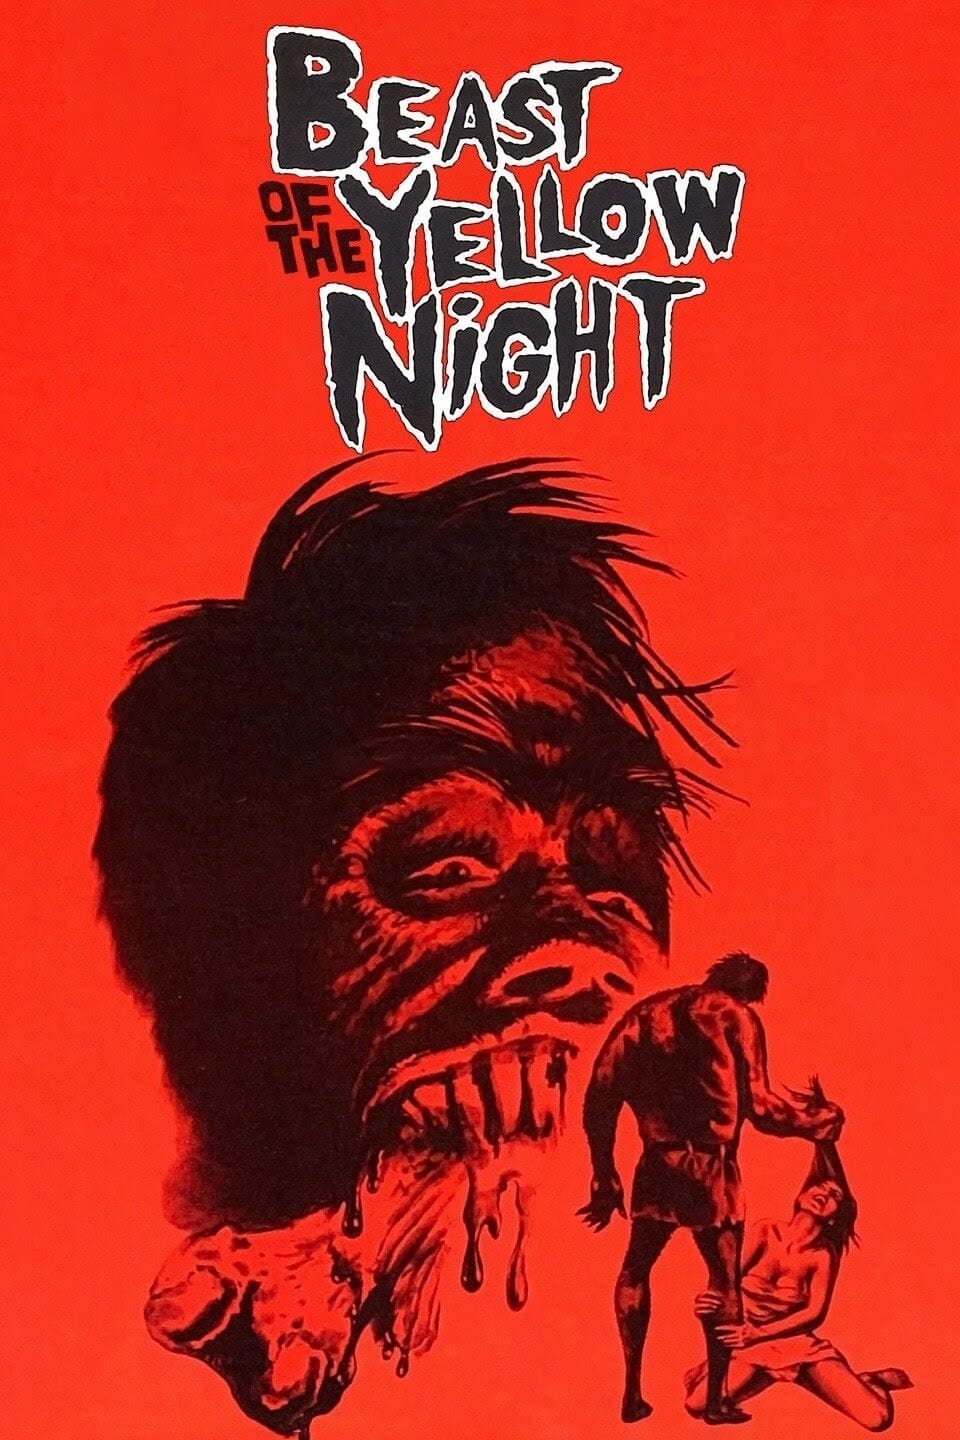 The Beast of the Yellow Night (1971)